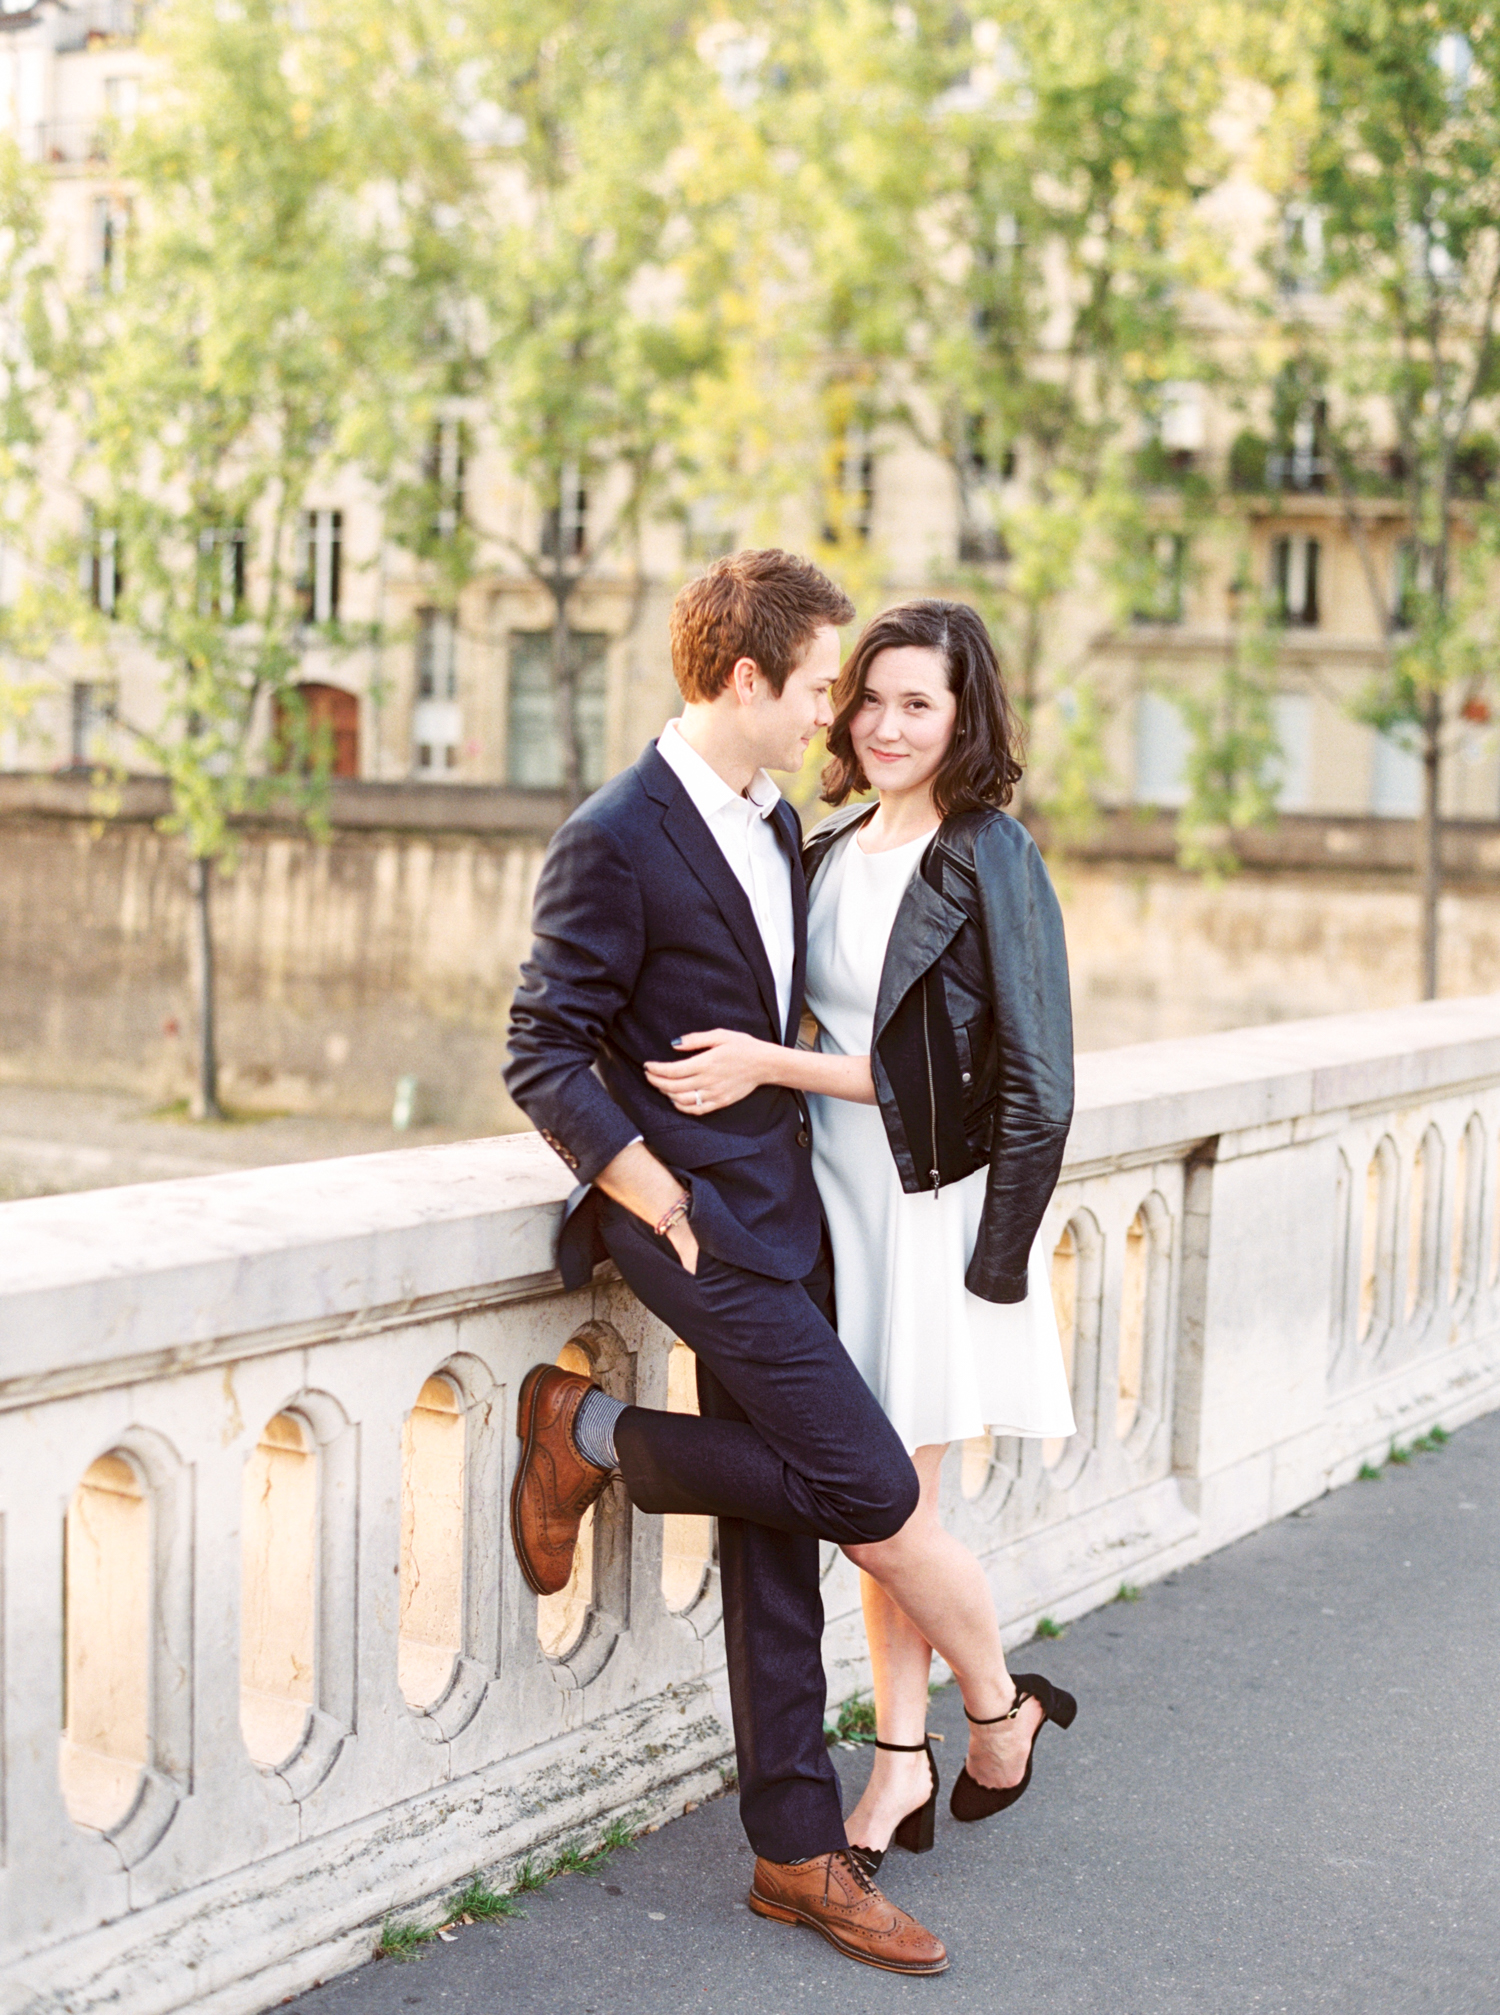 Paris engagement photographer | Paris wedding photography | Paris engagement photography | Paris couple cafe | France wedding photographer | Paris film photographer | Molly Carr Photography